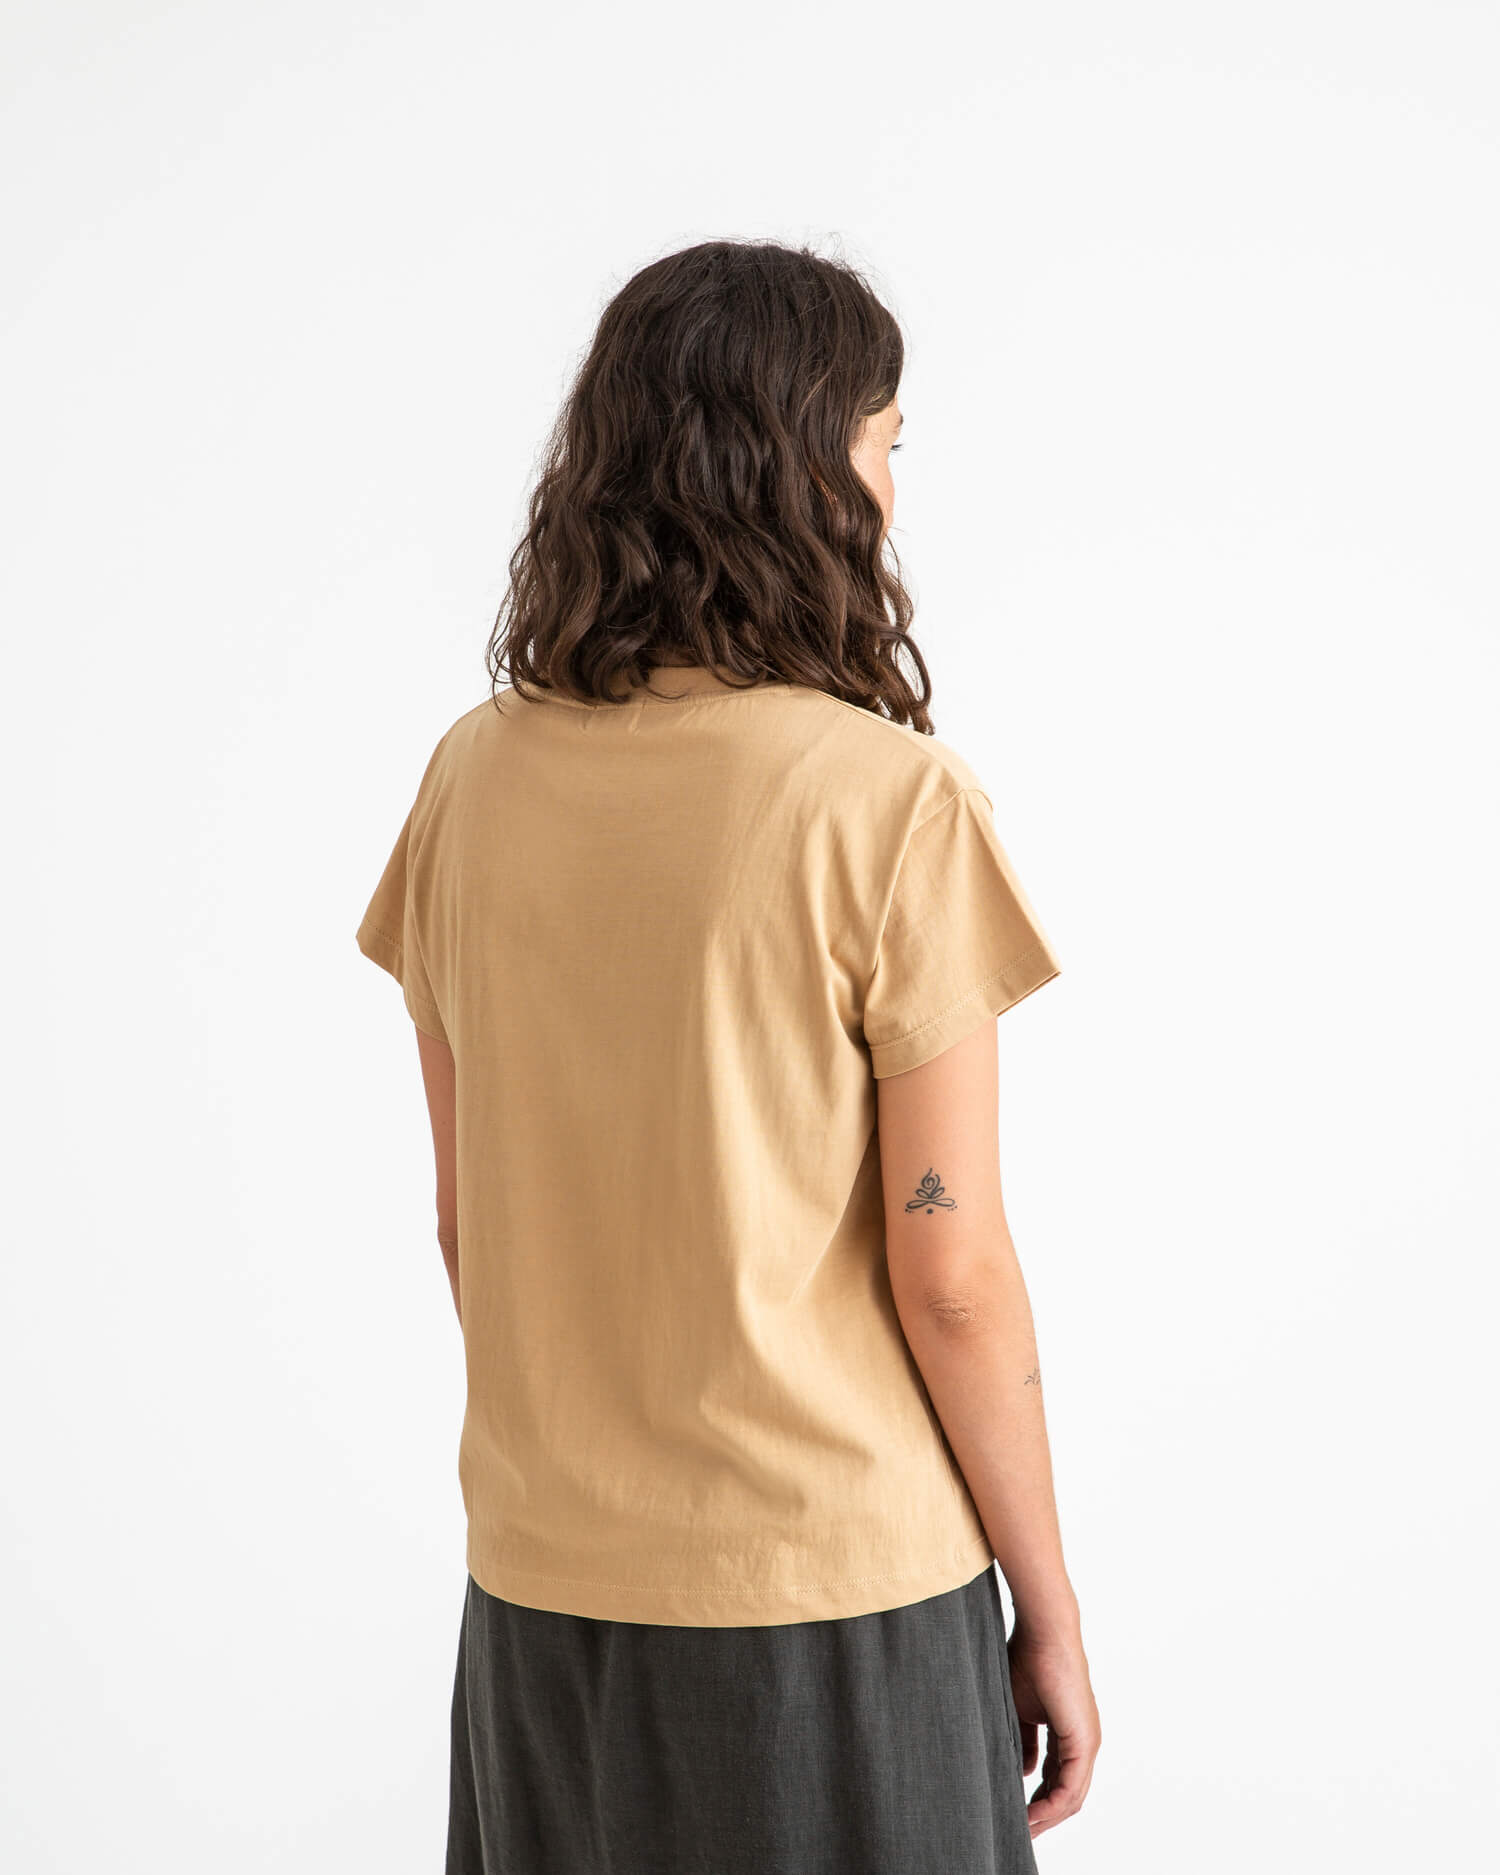 T-shirt Essential marron clair en coton 100% biologique de Matona